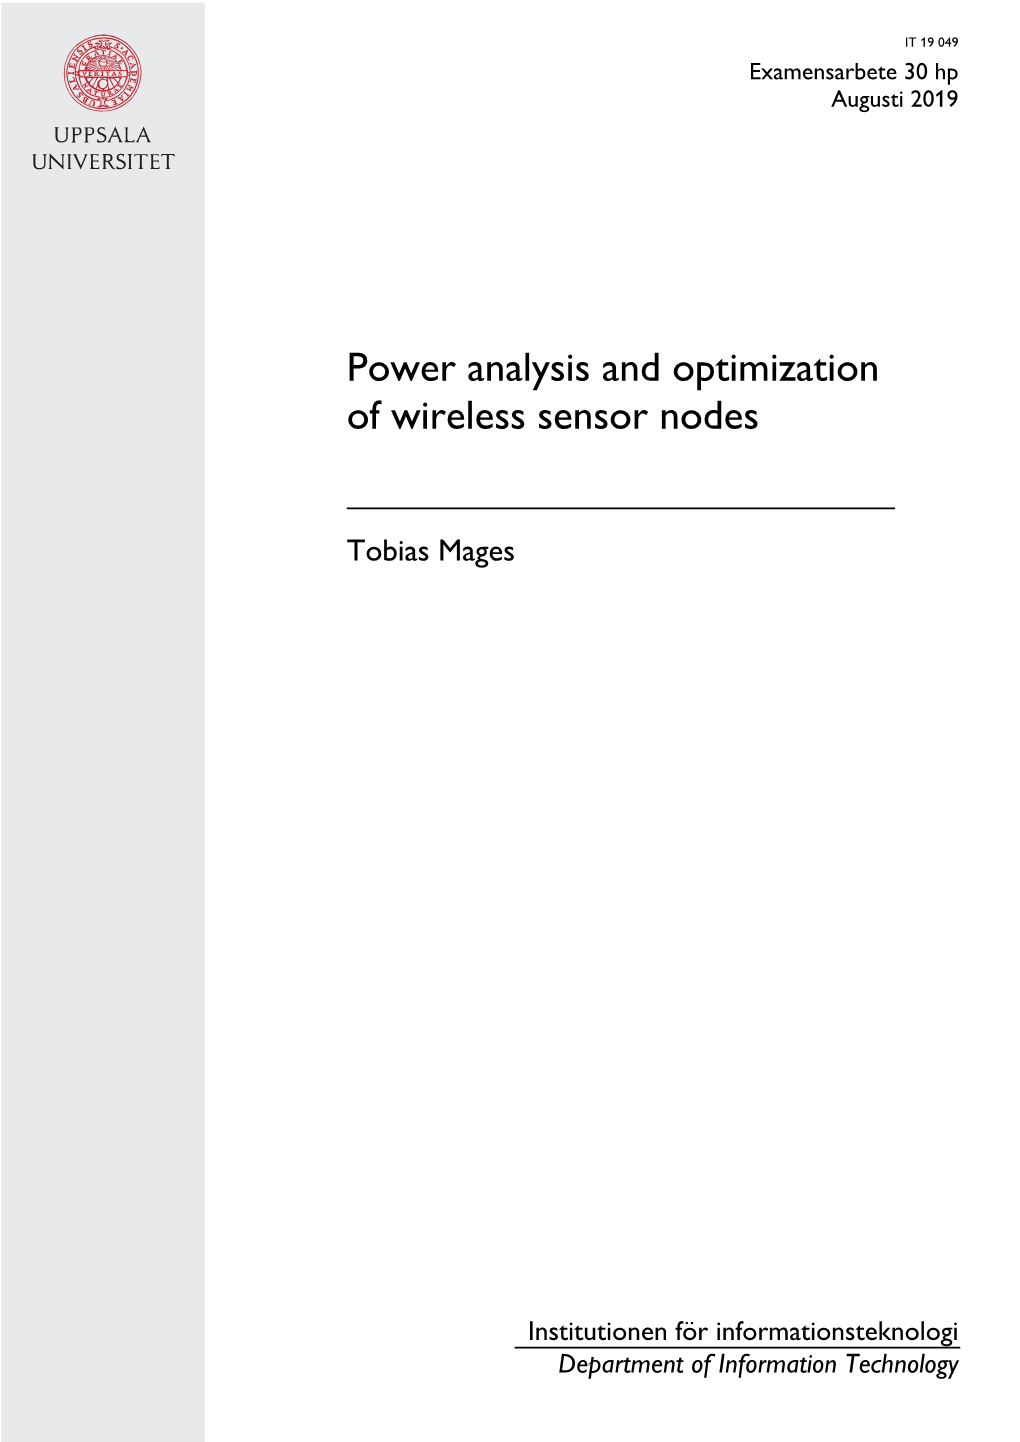 Power Analysis and Optimization of Wireless Sensor Nodes